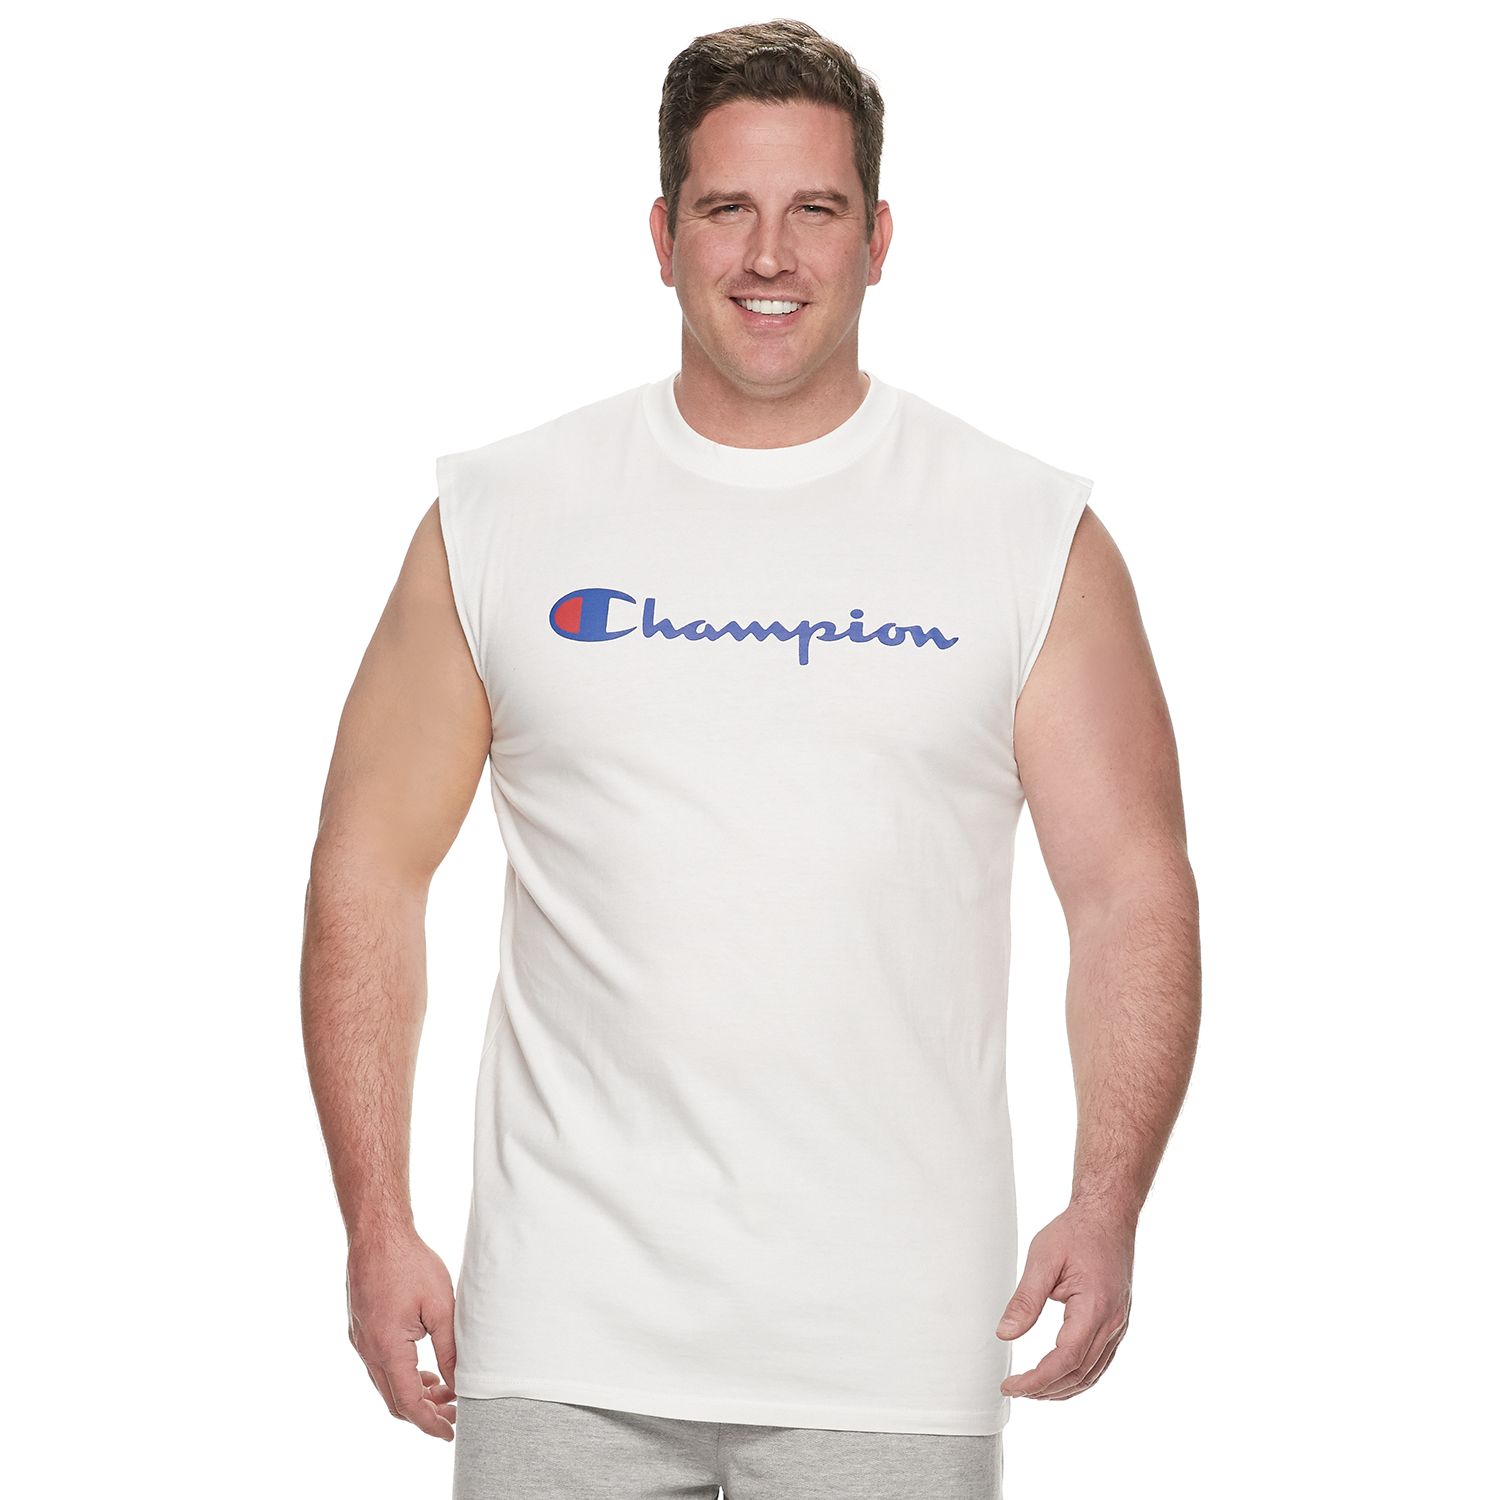 champion muscle tee shirts